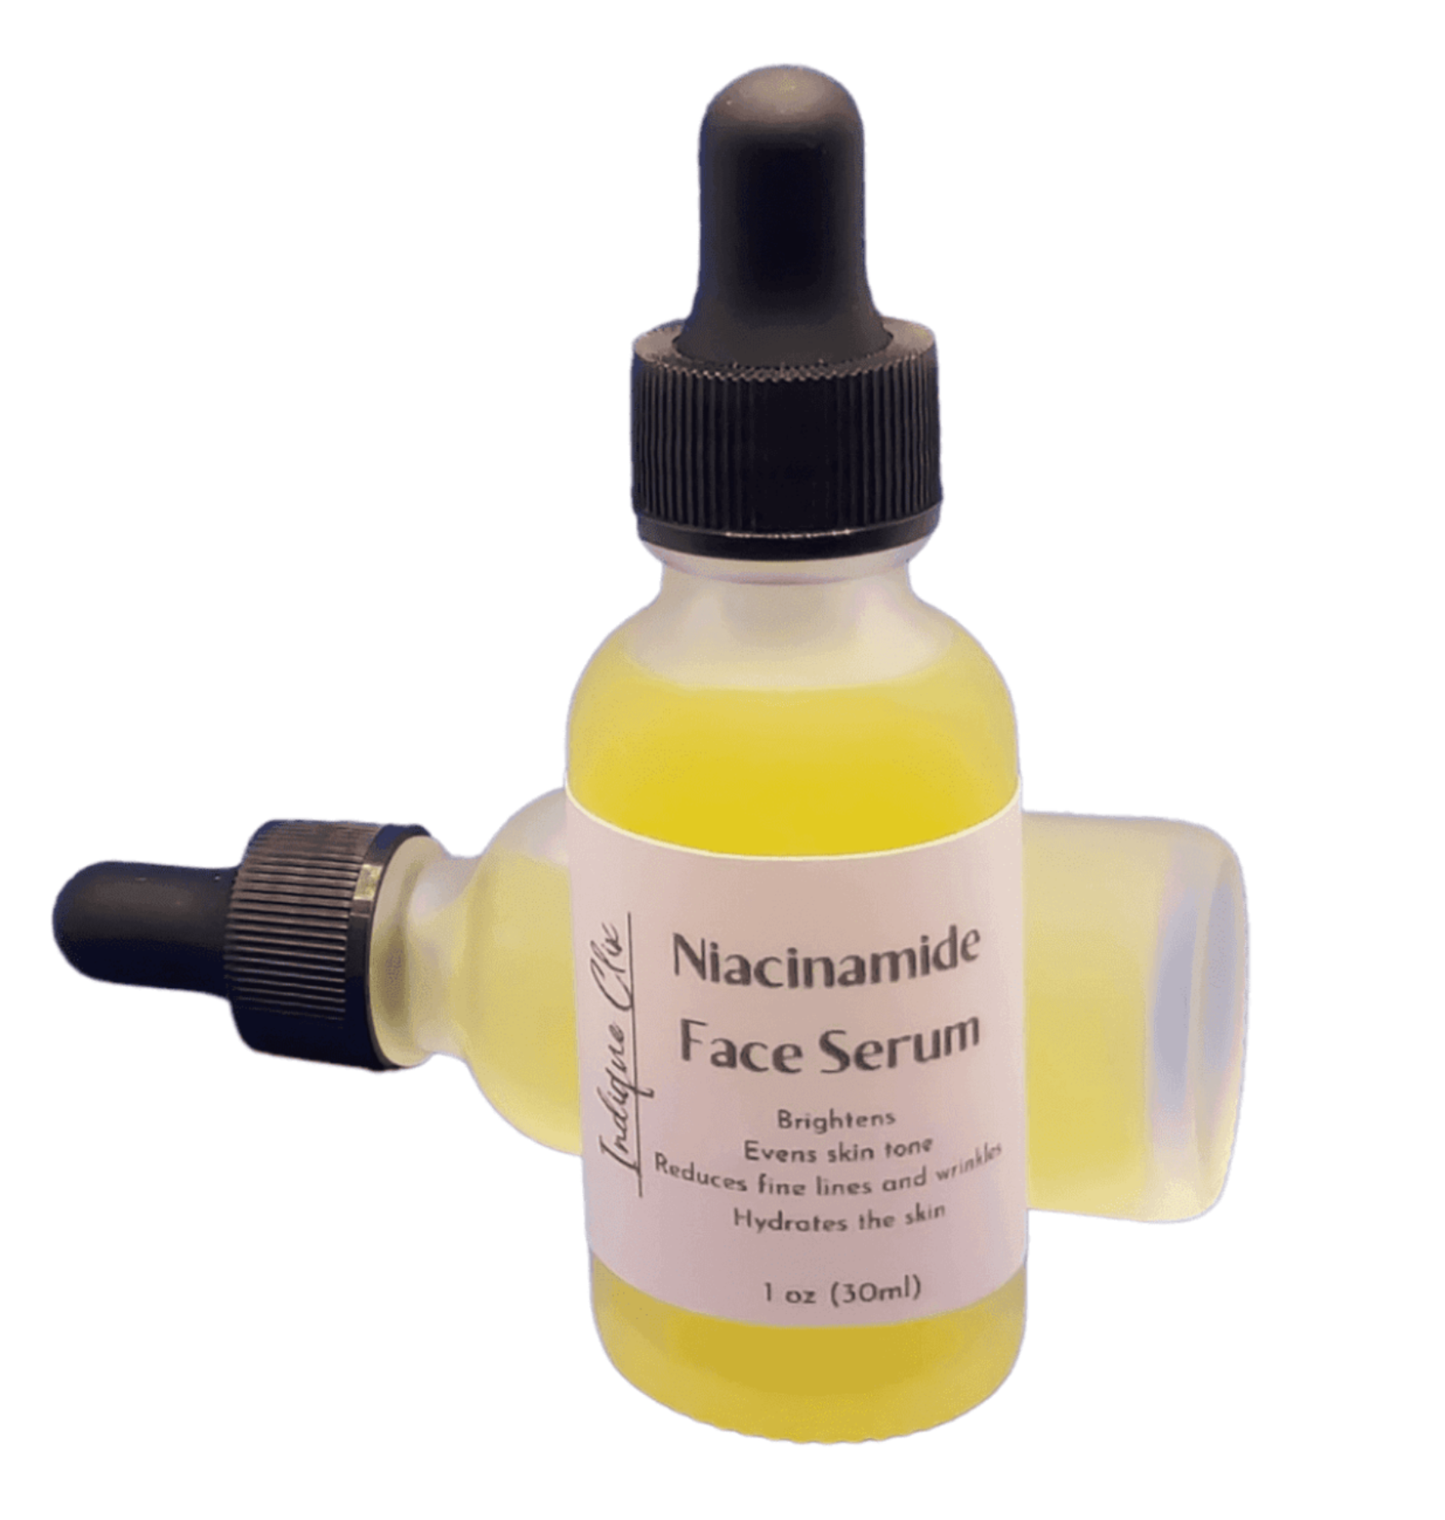 Niacinamide Face Serum - Premium Face Serum from indiqueclix.com - Just $25.00! Shop now at indiqueclix.com